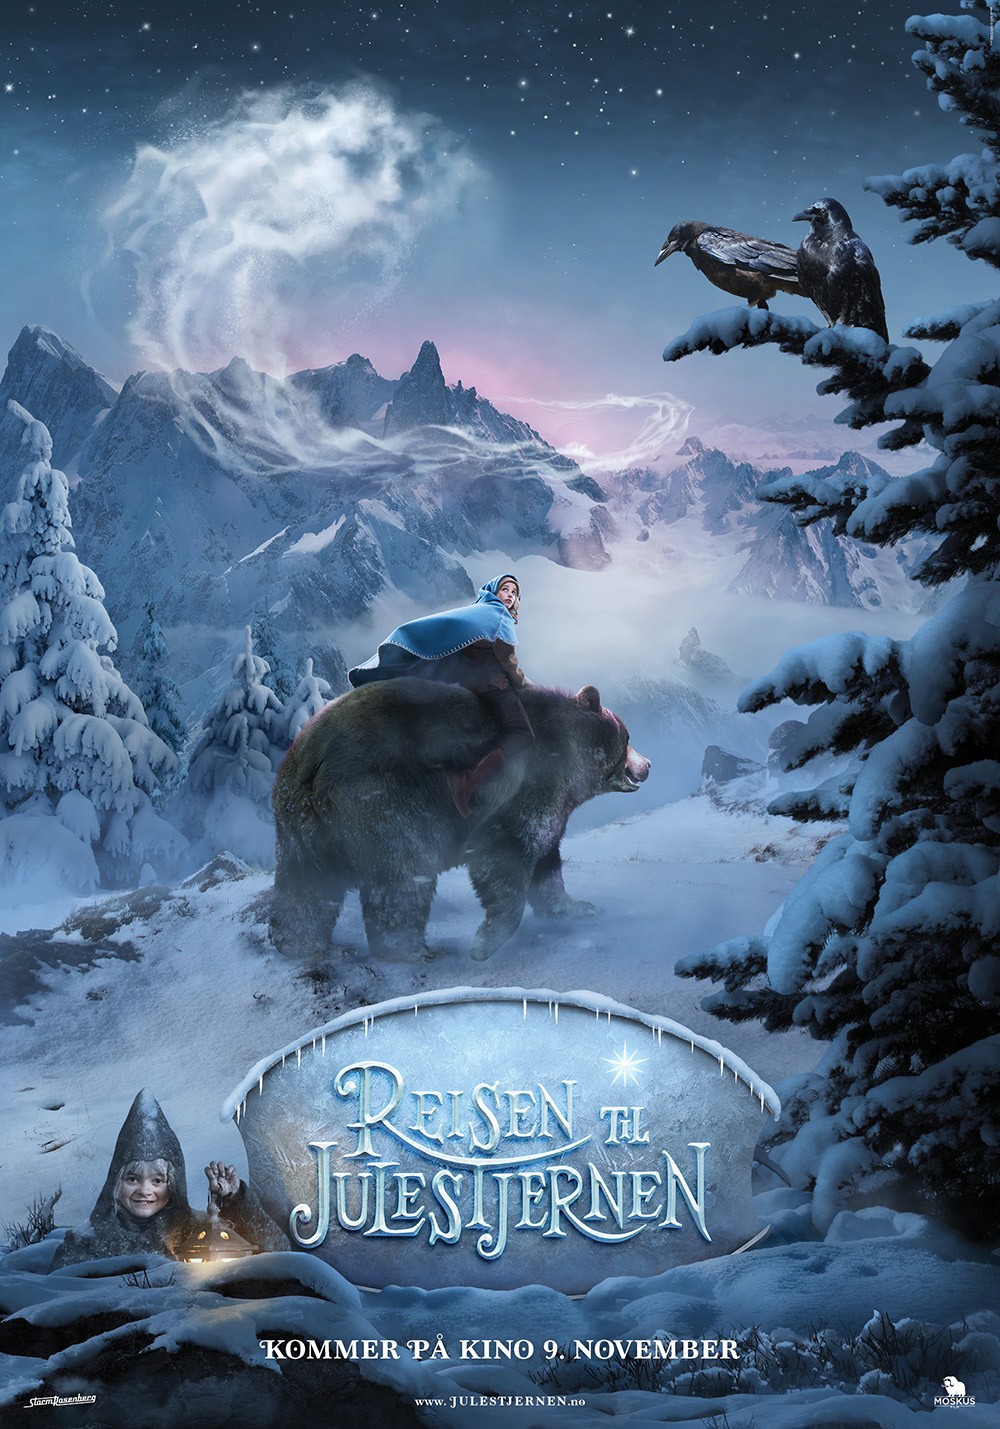 Extra Large Movie Poster Image for Reisen til julestjernen (#2 of 4)